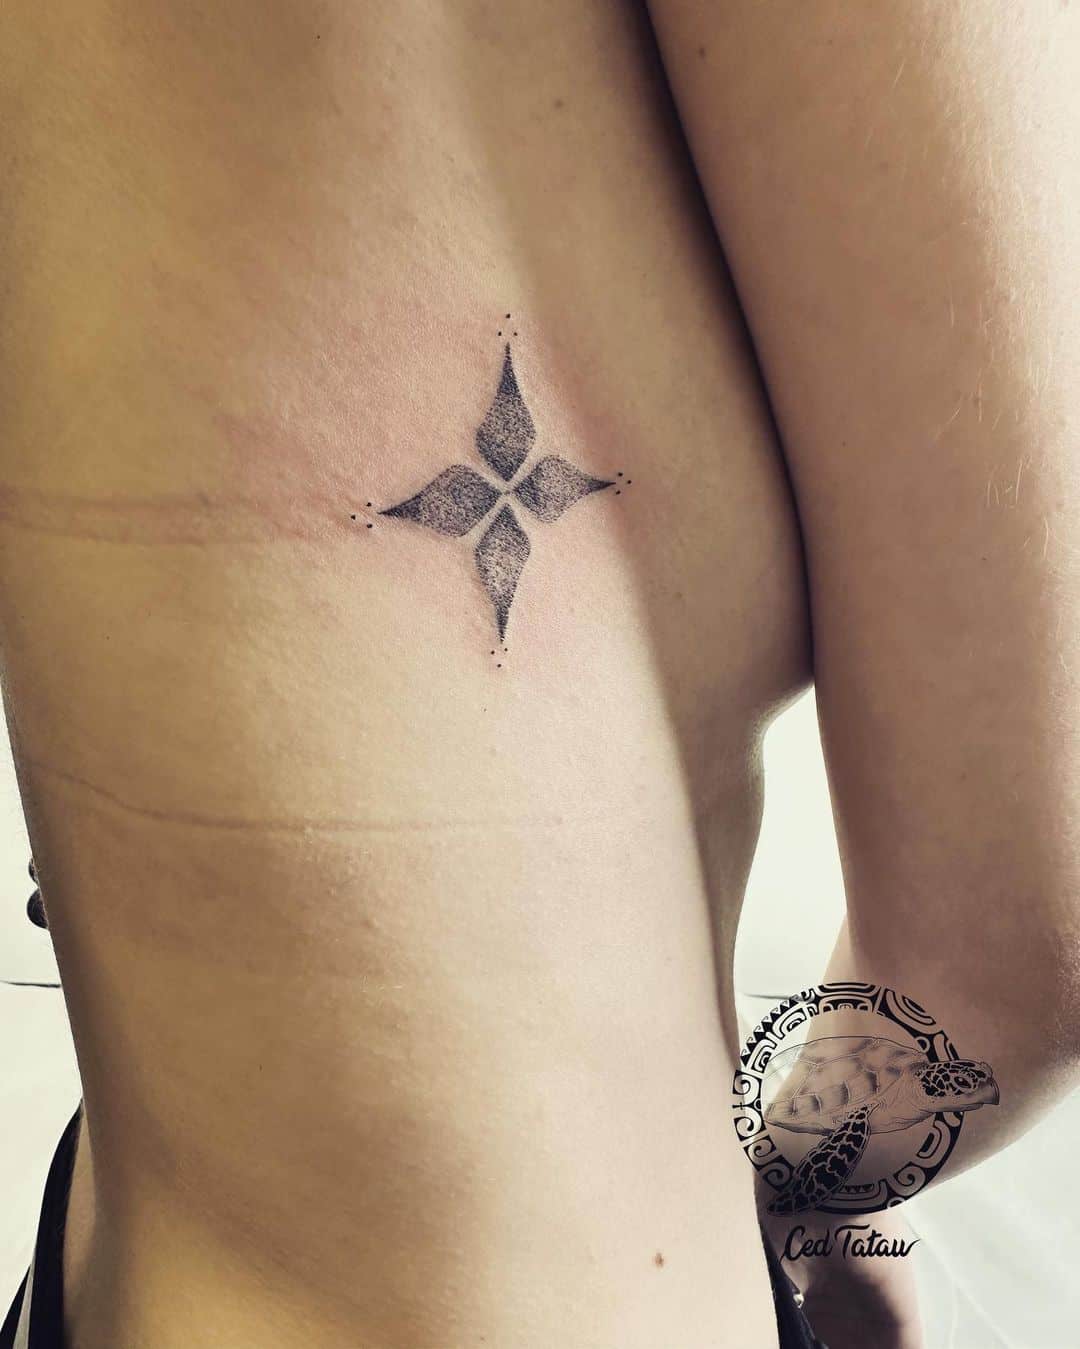 Simple dotwork tattoo by ced tatau